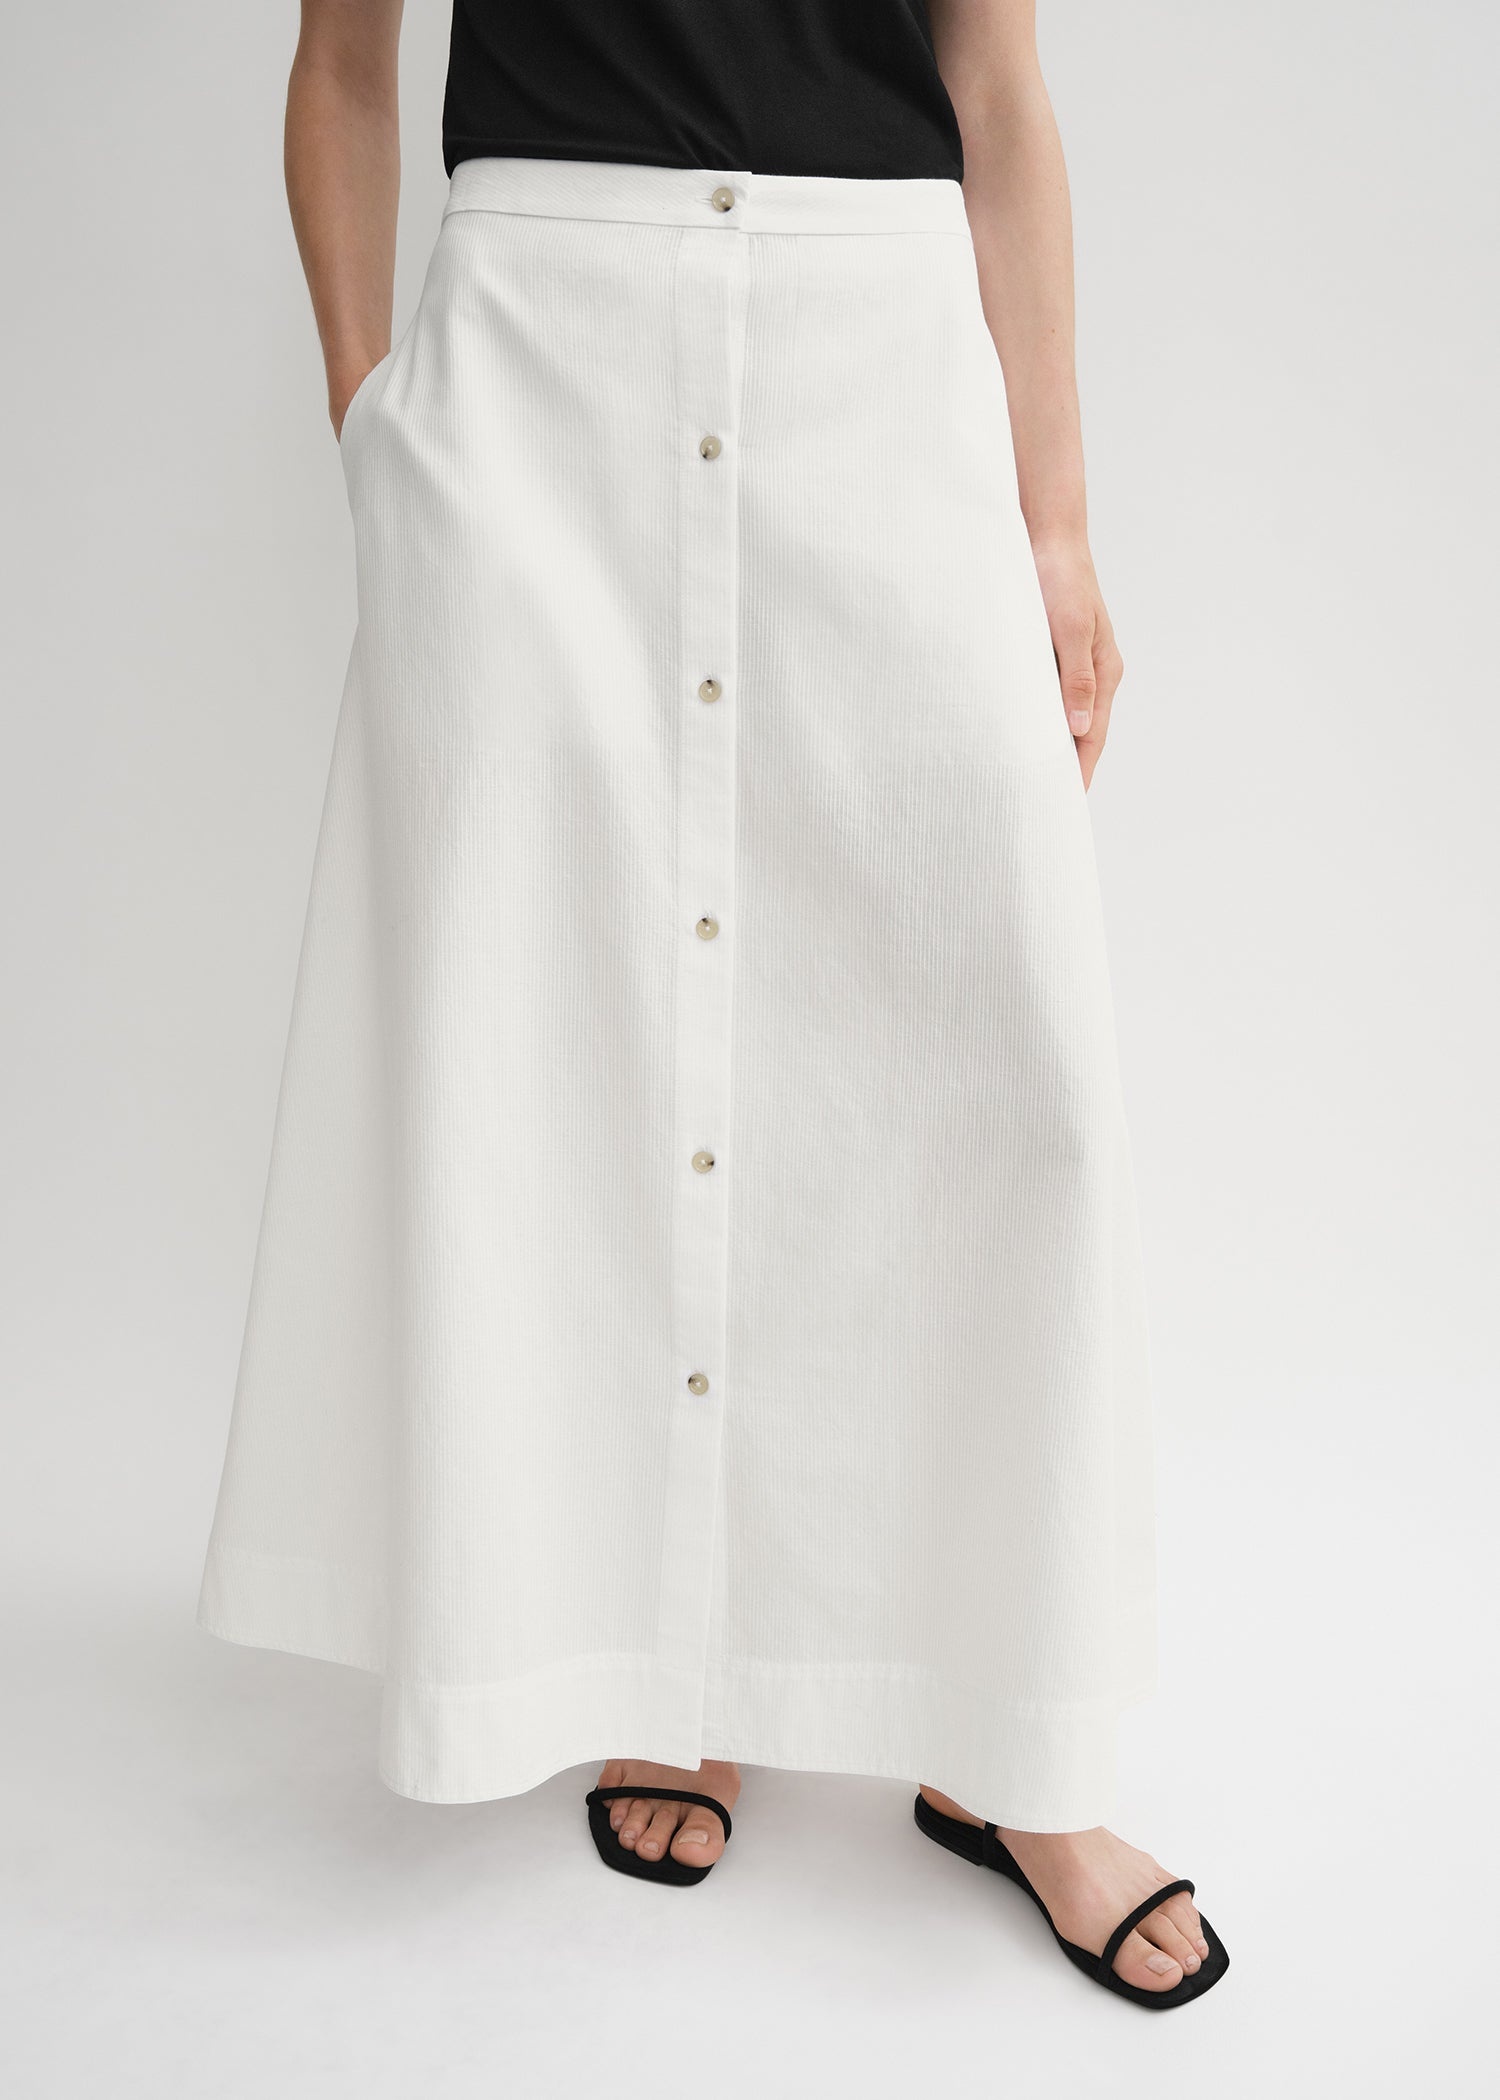 Jacquard stripe skirt white - 5